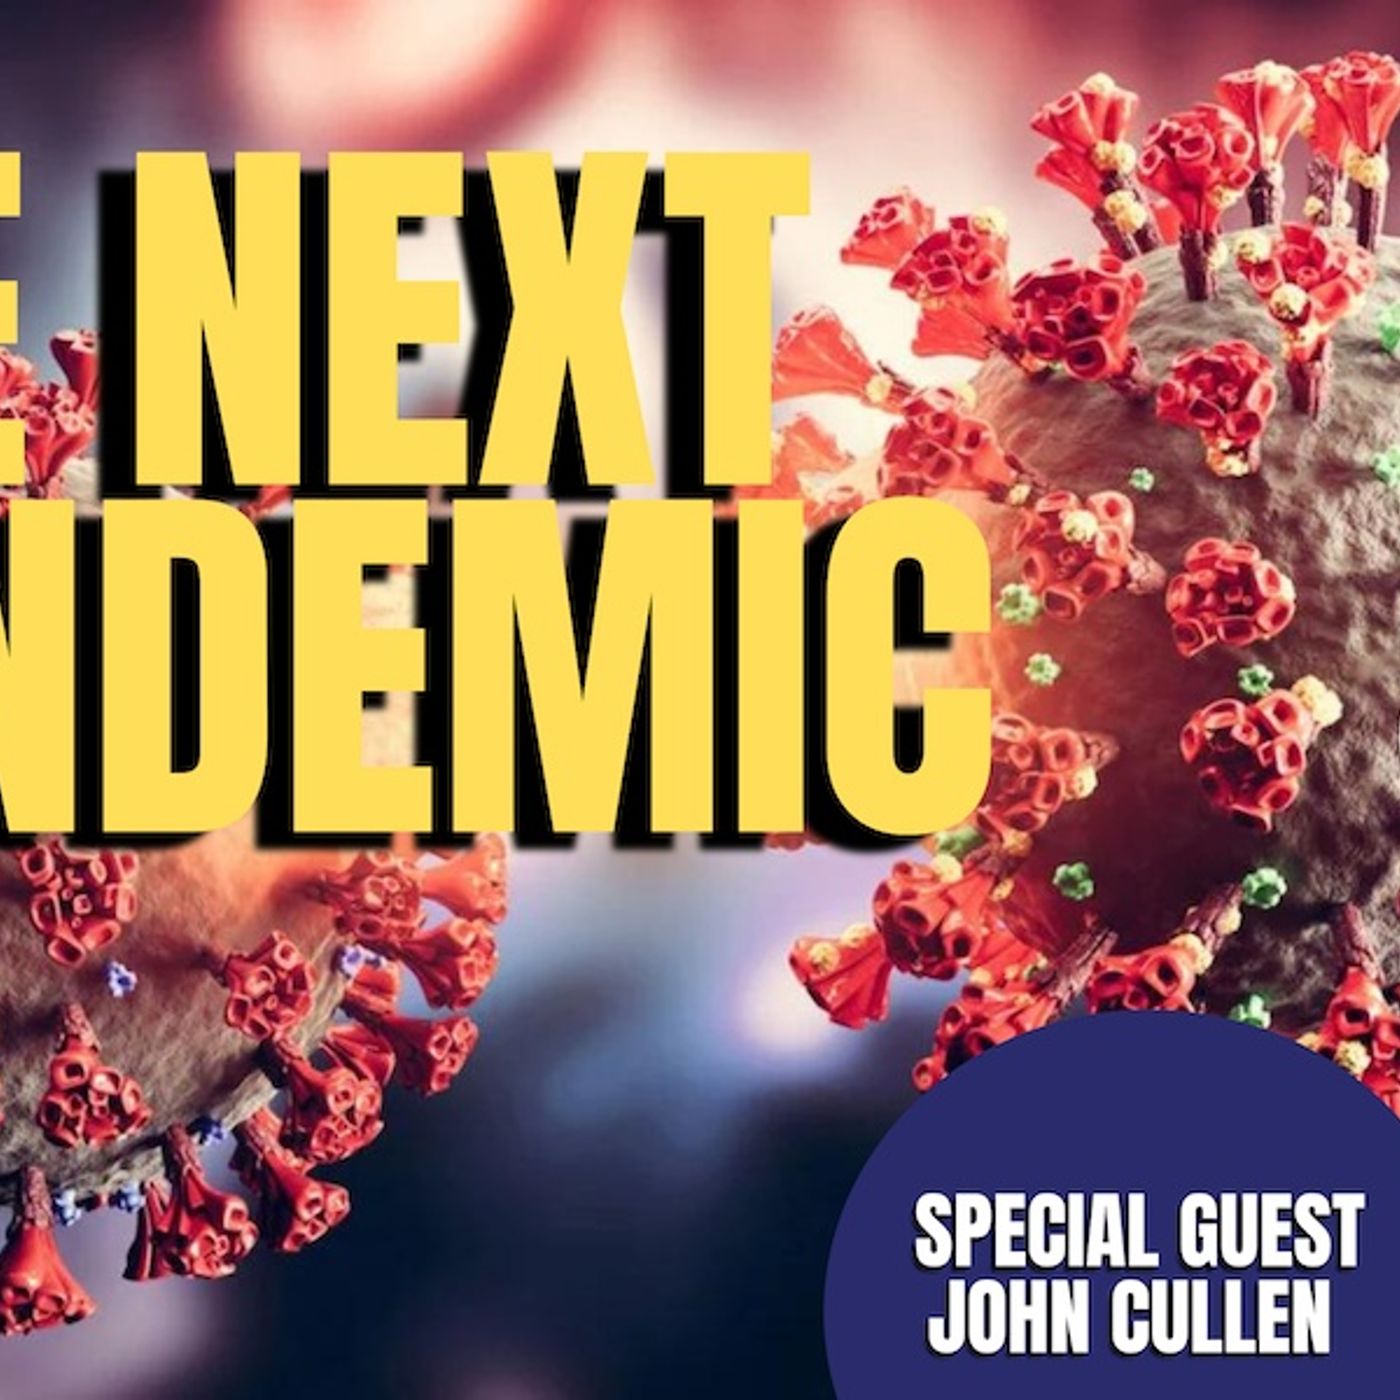 The Next Pandemic | John Cullen (TPC #1,485)